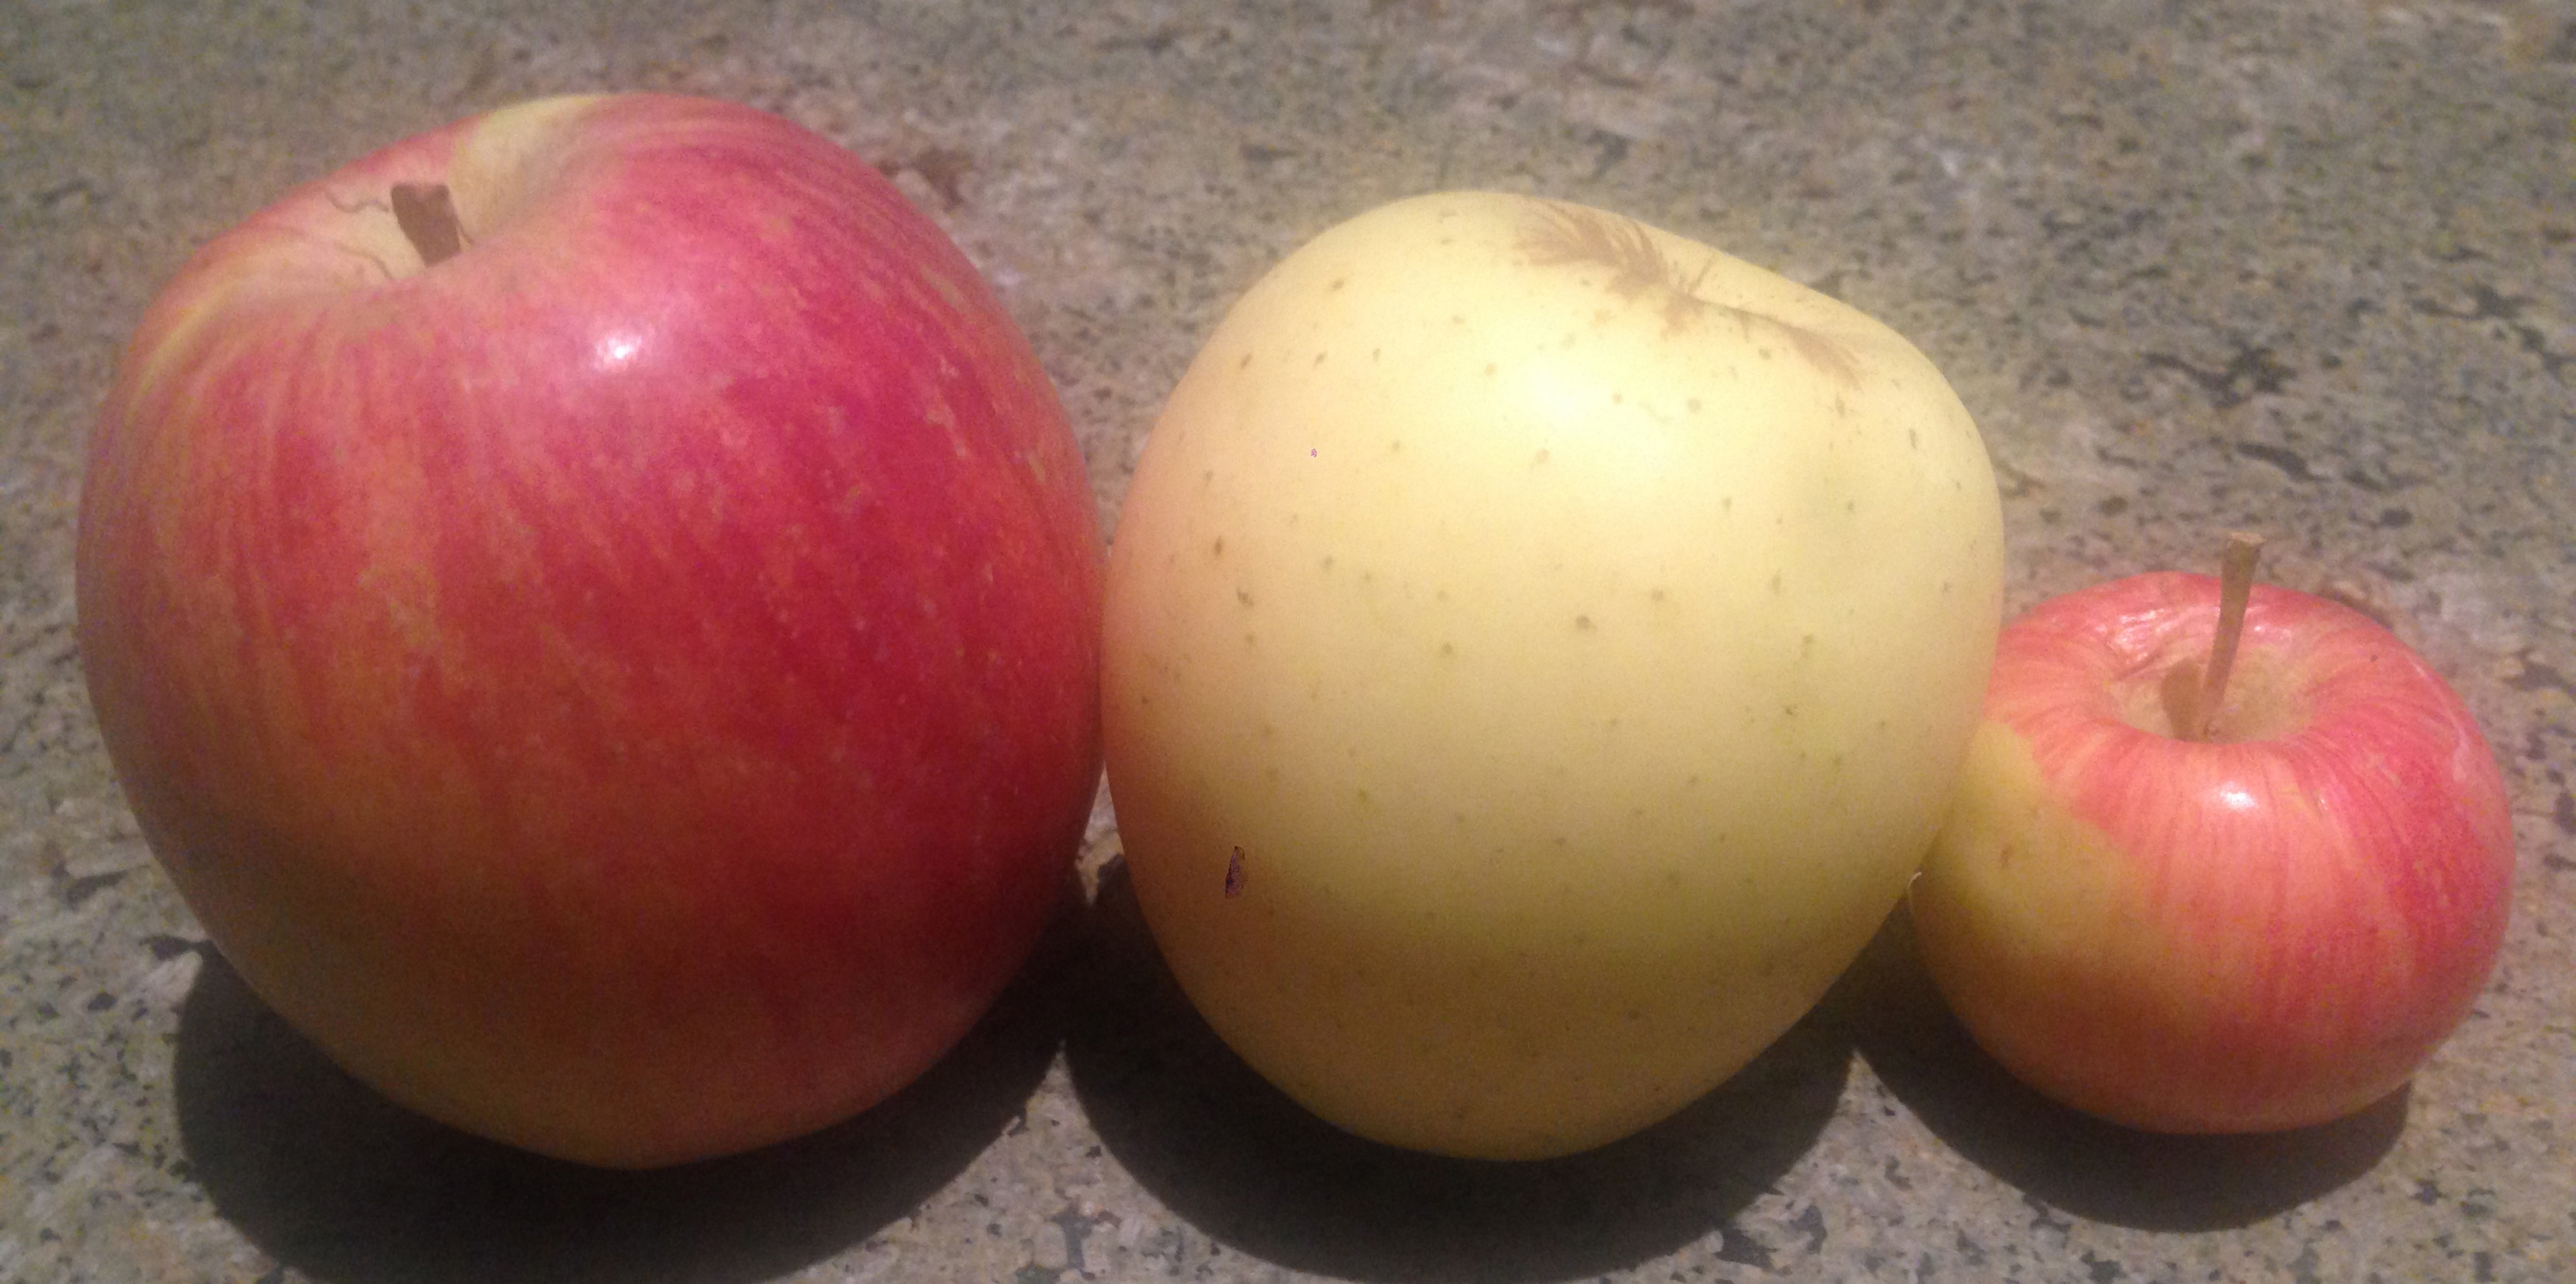 apples to apples IX: fuji, golden delicious, wickson